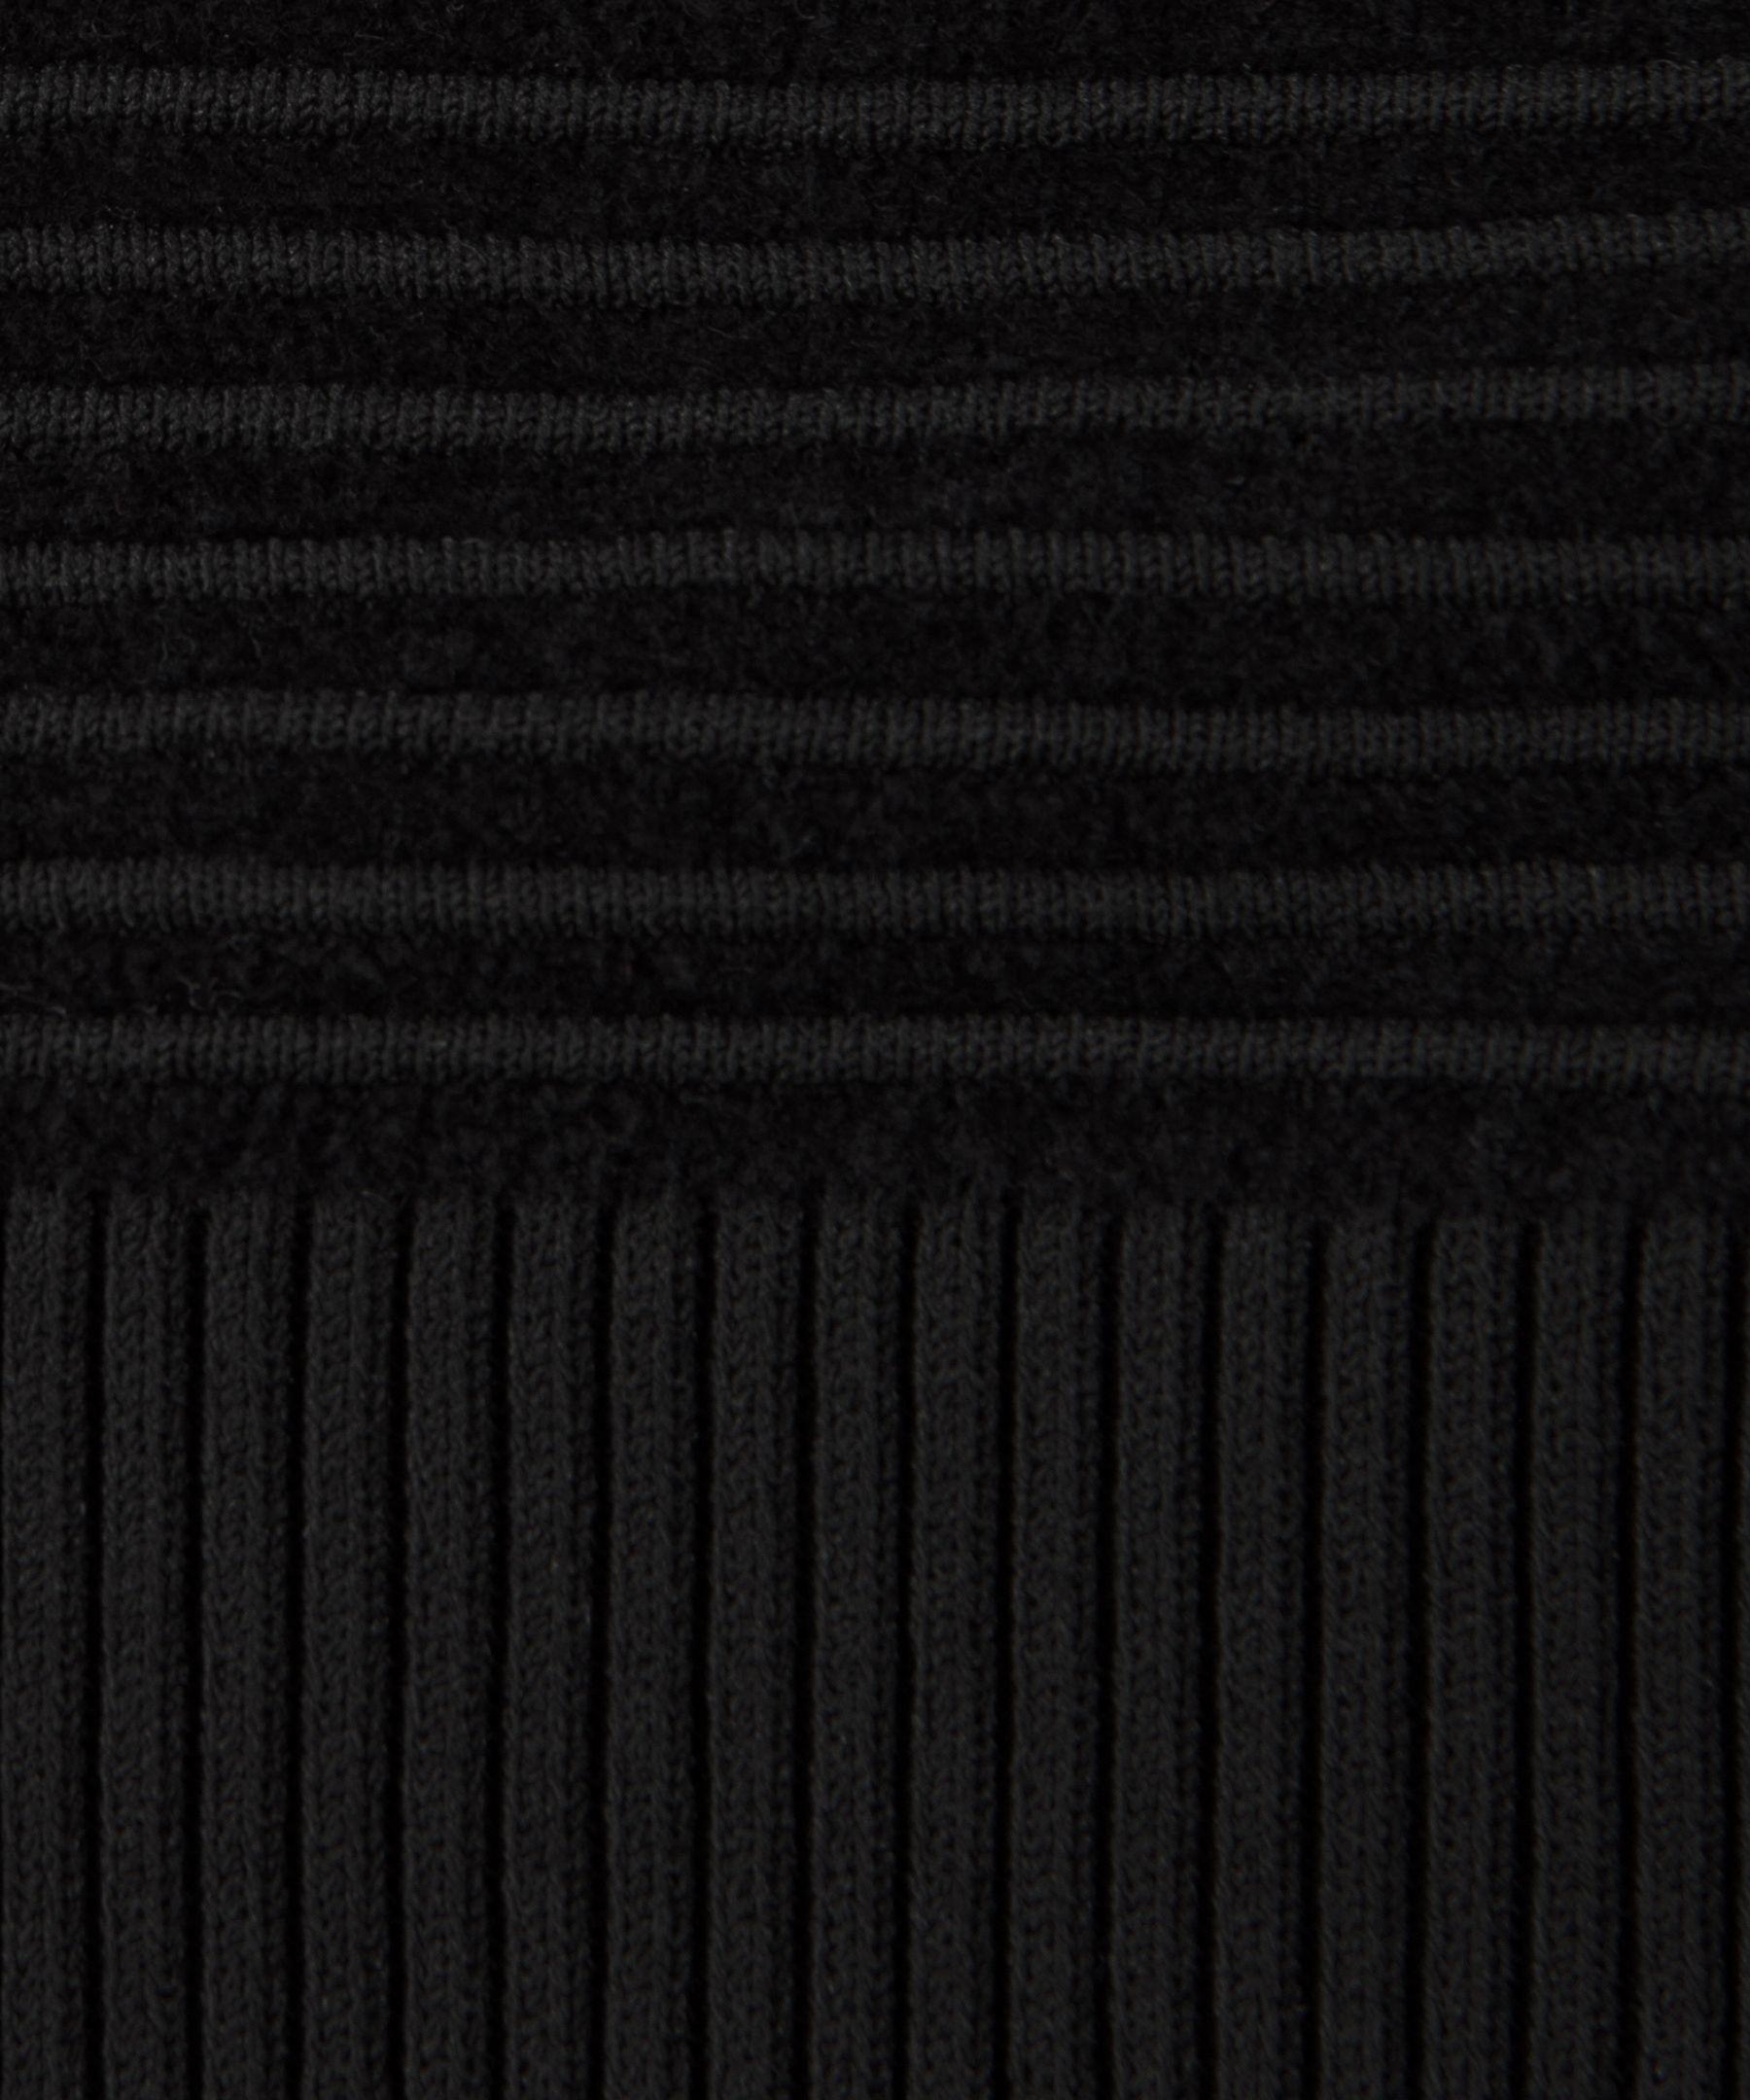 Lululemon Athletica Color Block Solid Black Sweatshirt Size 12 - 47% off